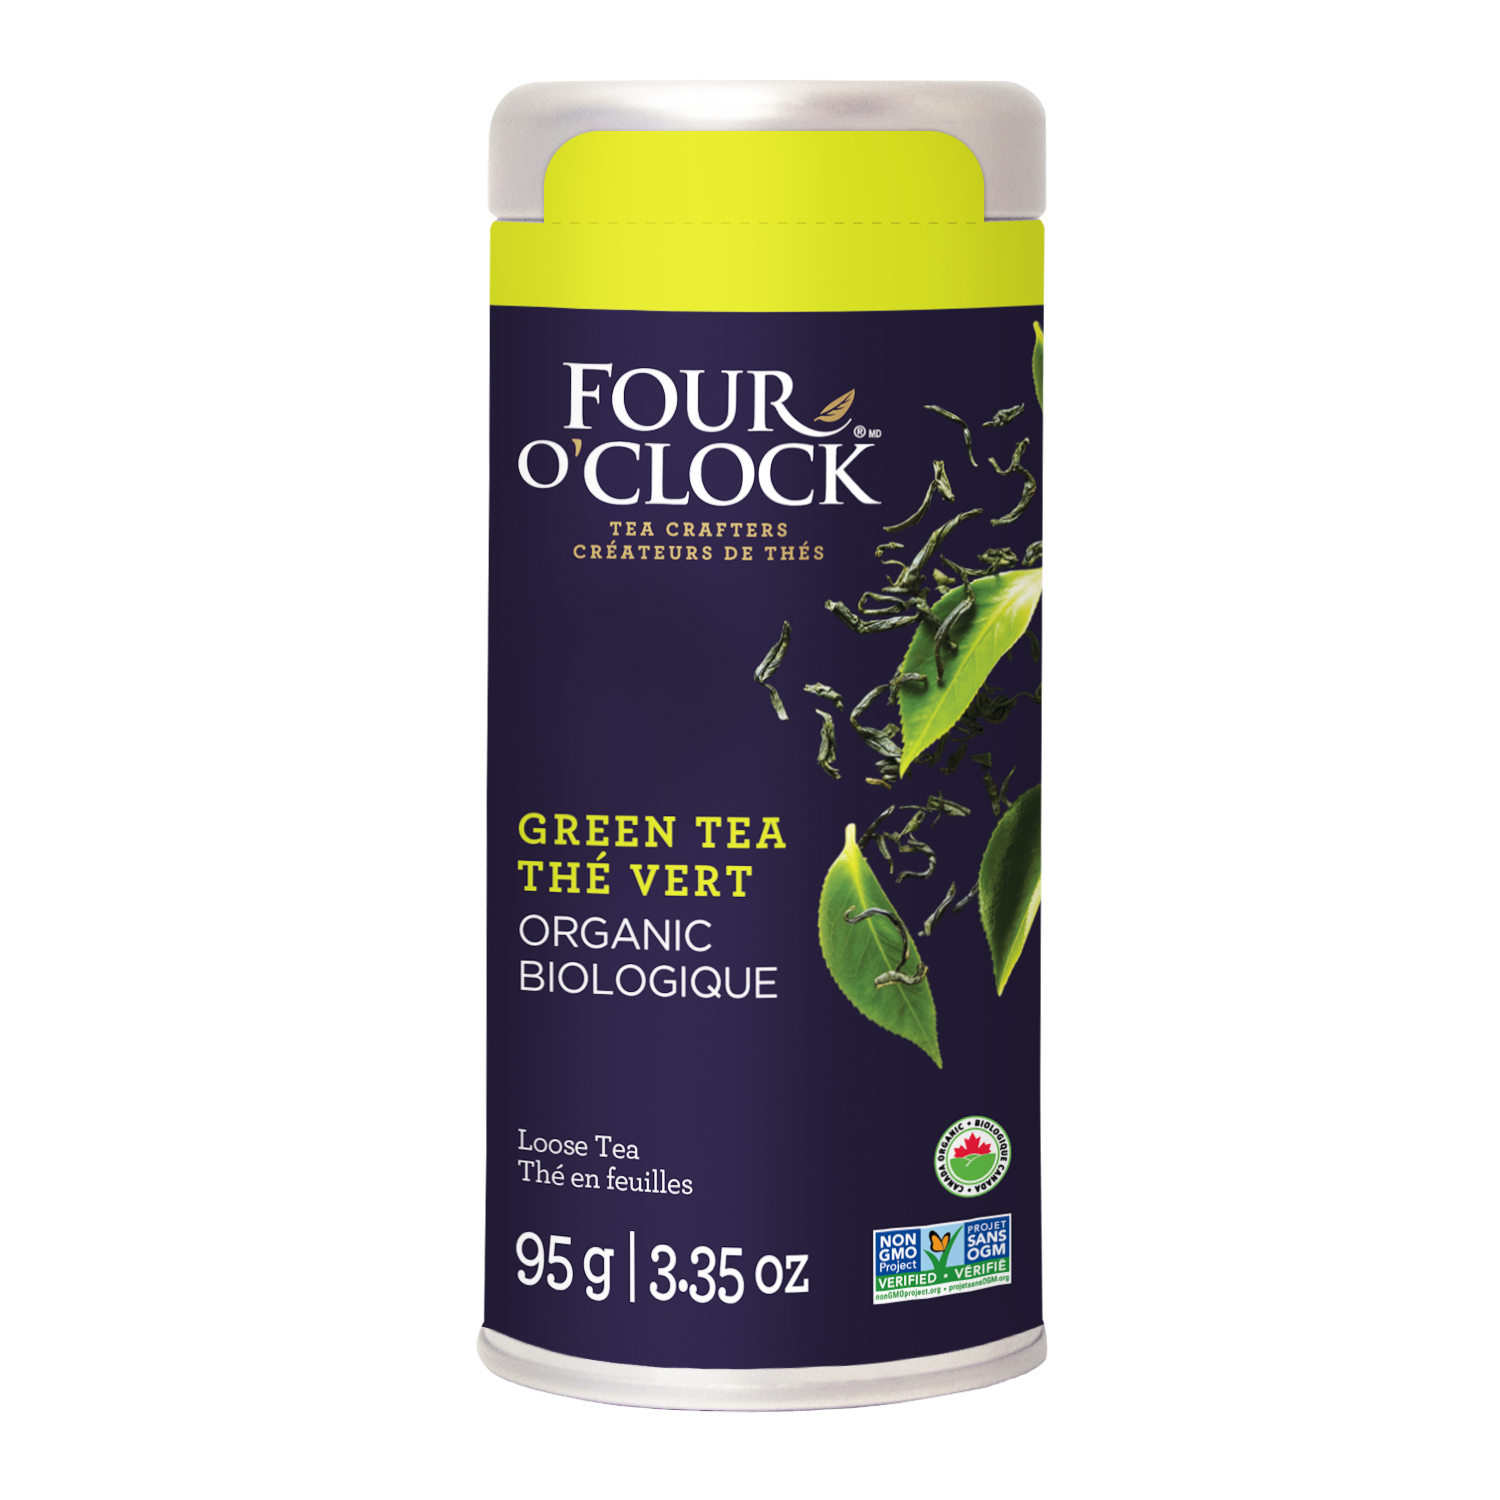 Loose Leaf Organic Green Tea